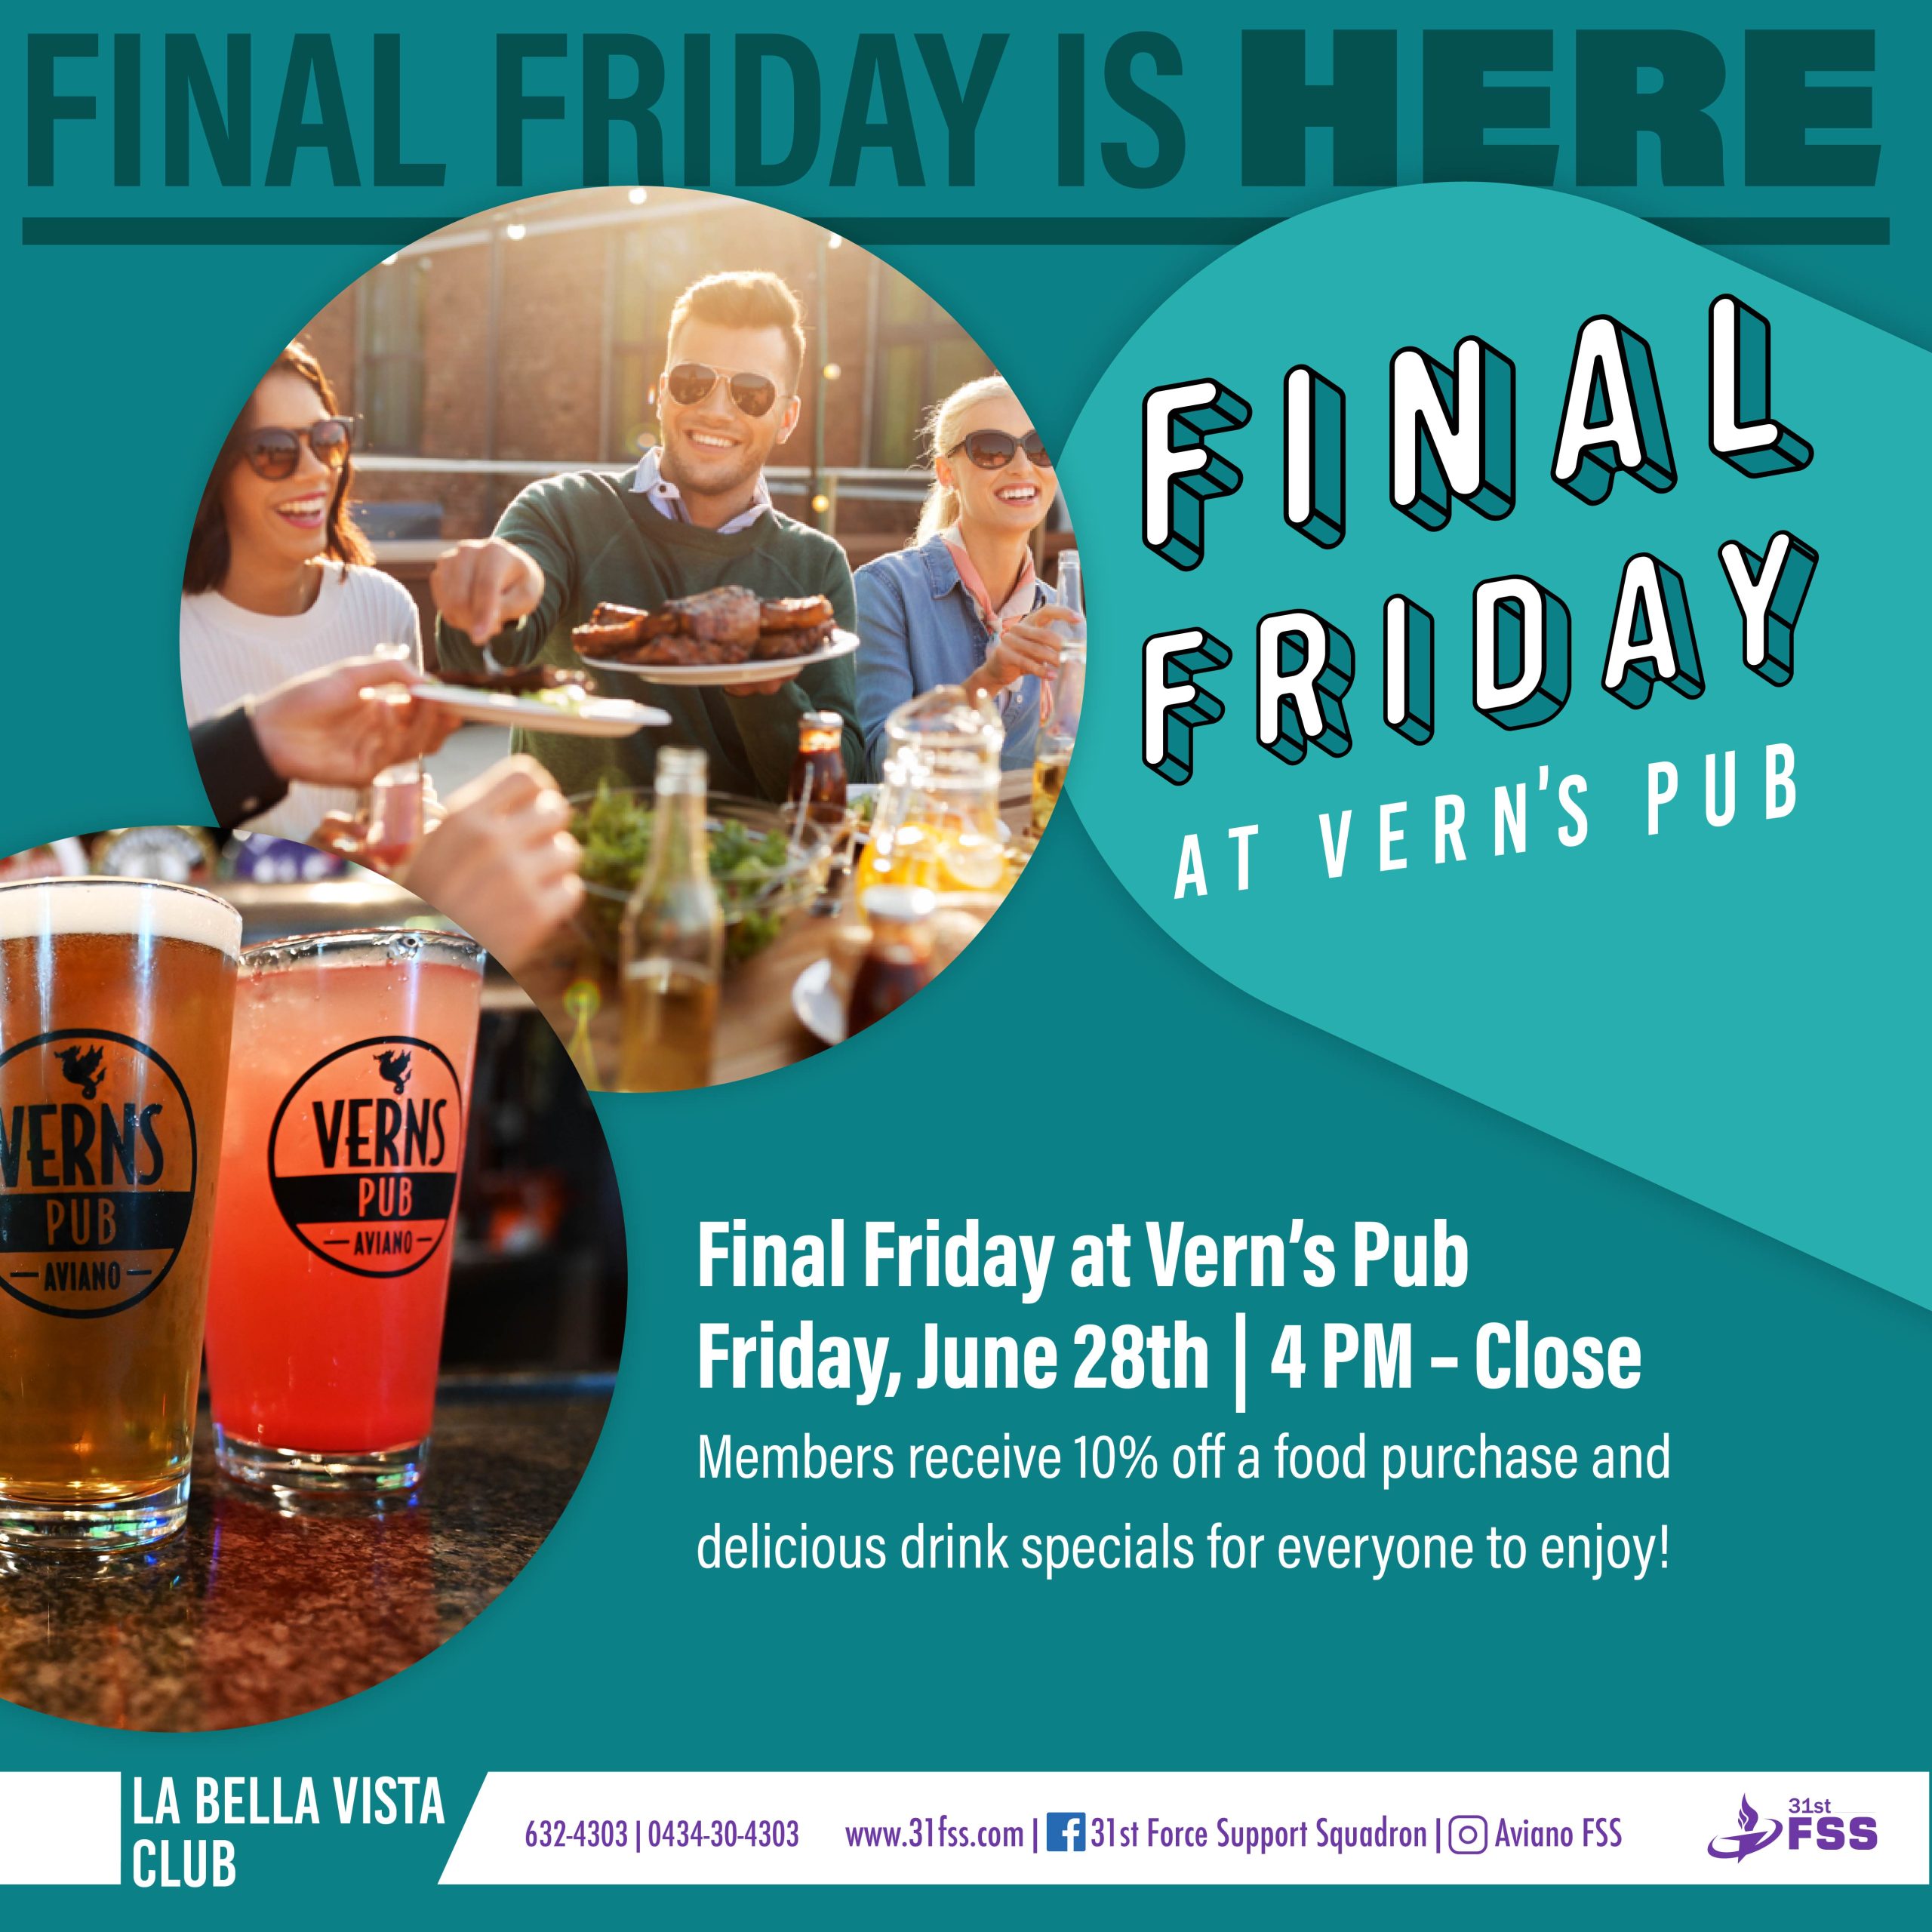 Final Friday at Vern’s Pub